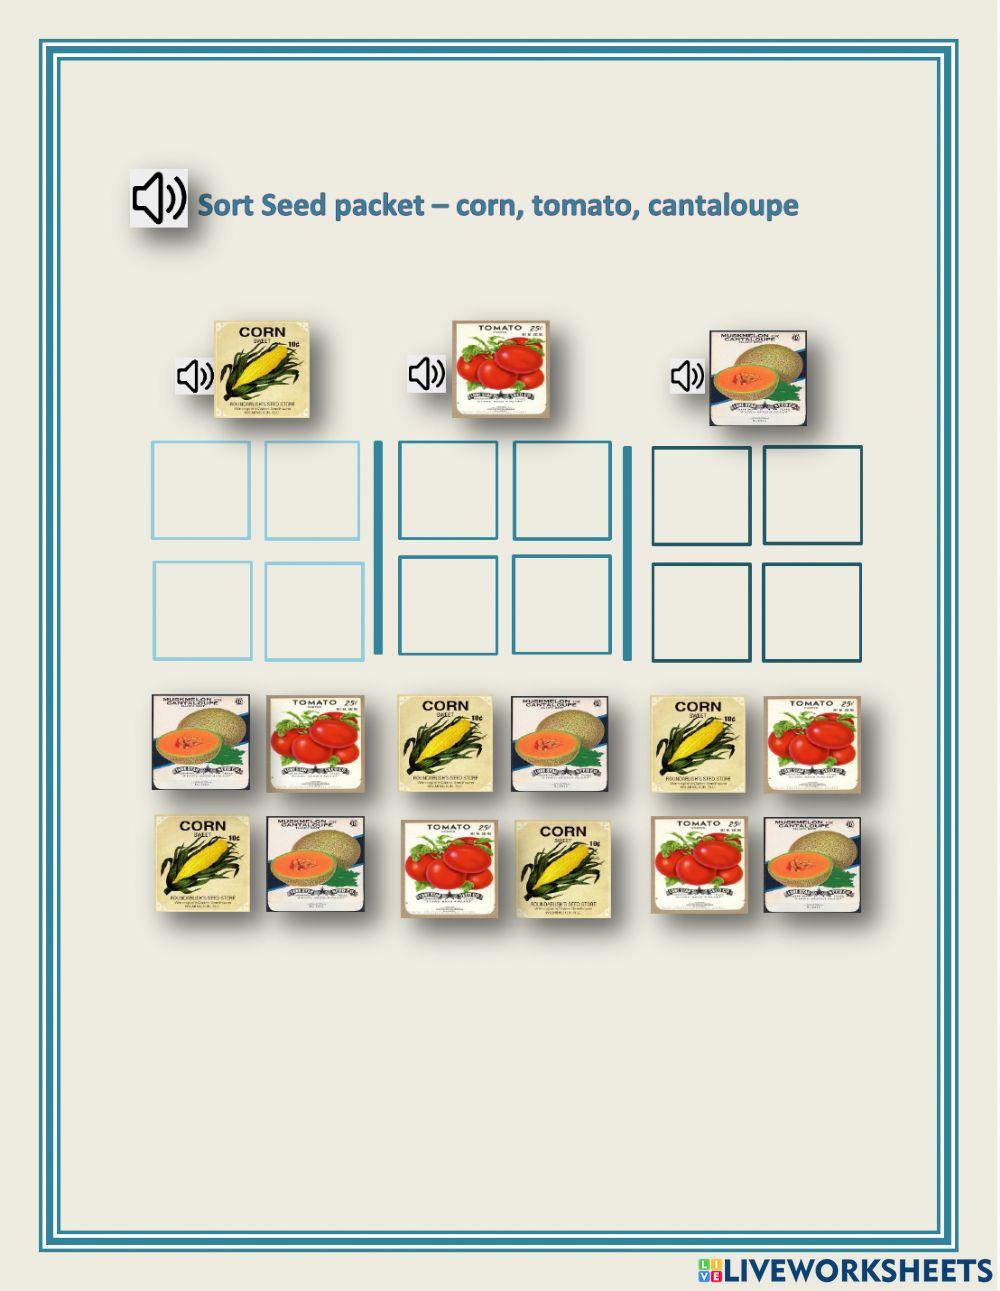 Sort object - corn, tomato, cantaloupe - 1.04 - LN